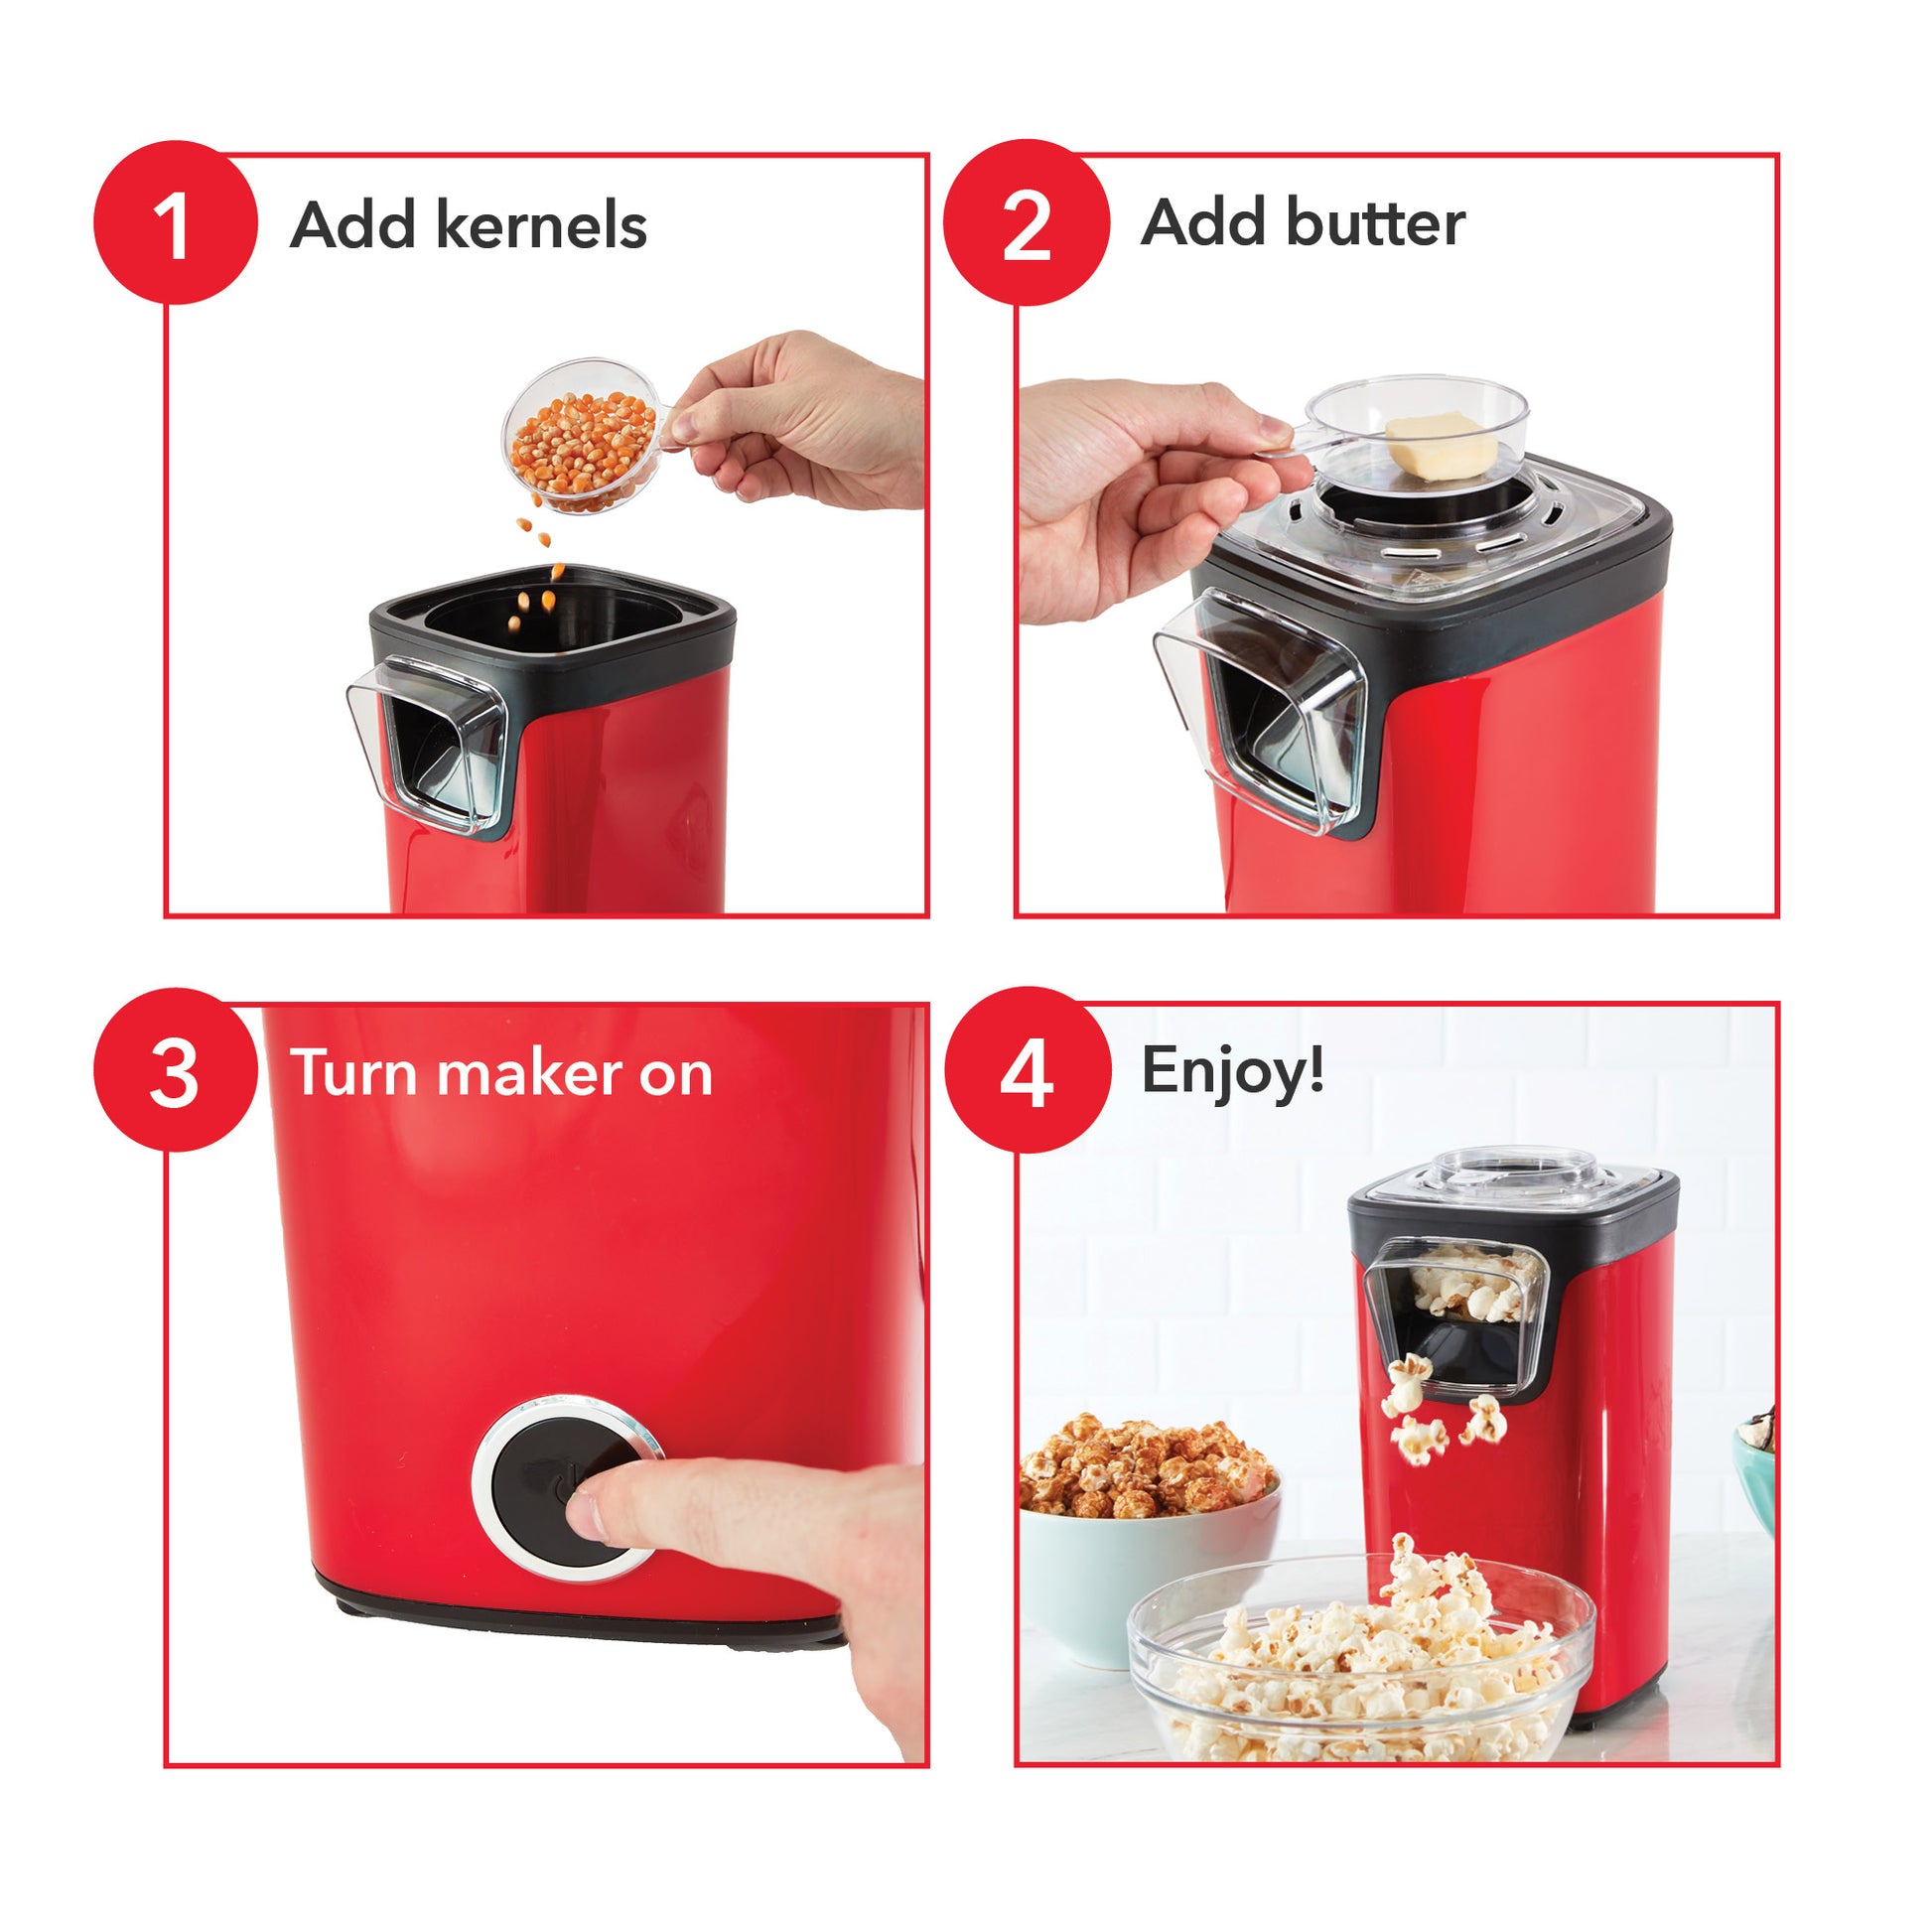 Turbo Pop Popcorn Maker Popcorn Makers Dash   